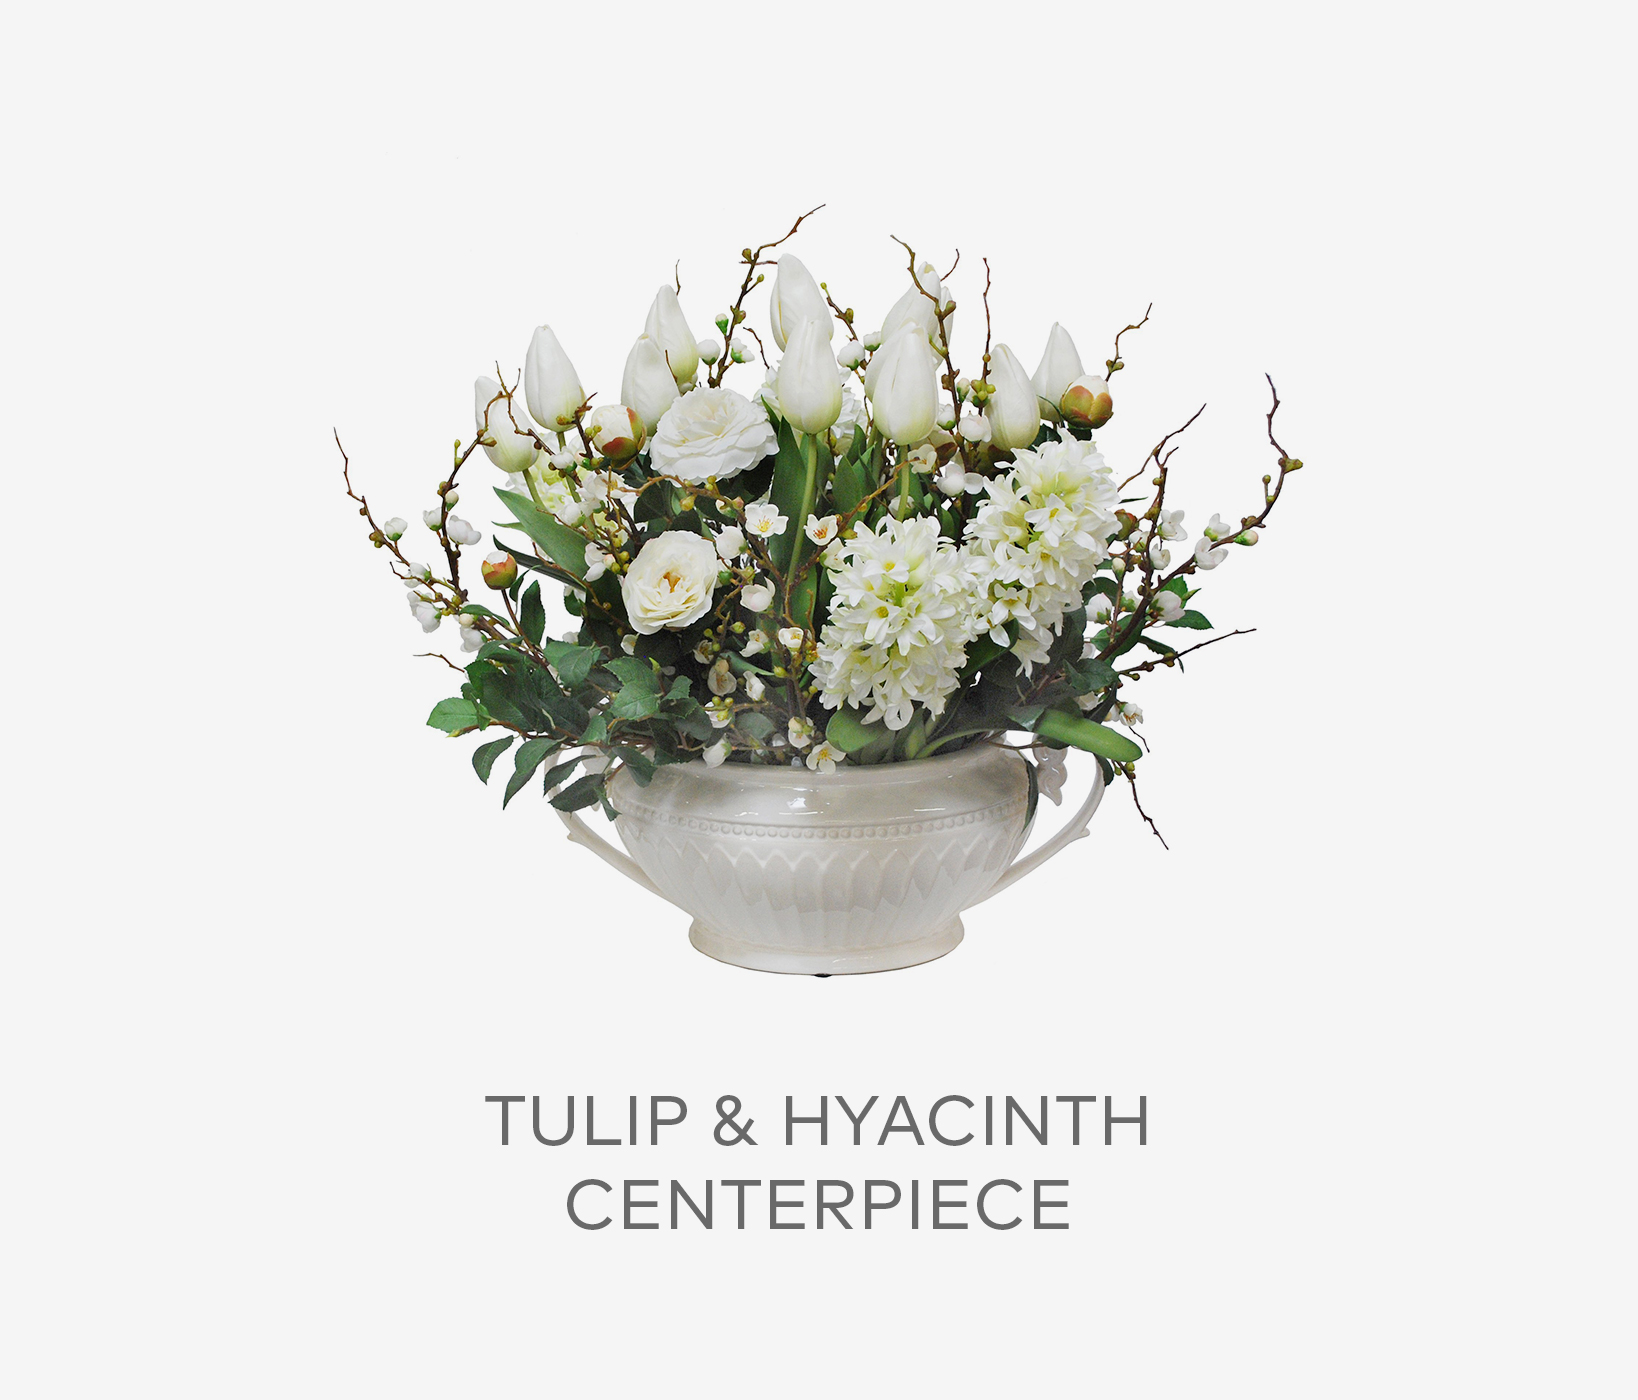 Tulip & Hyacinth Centerpiece